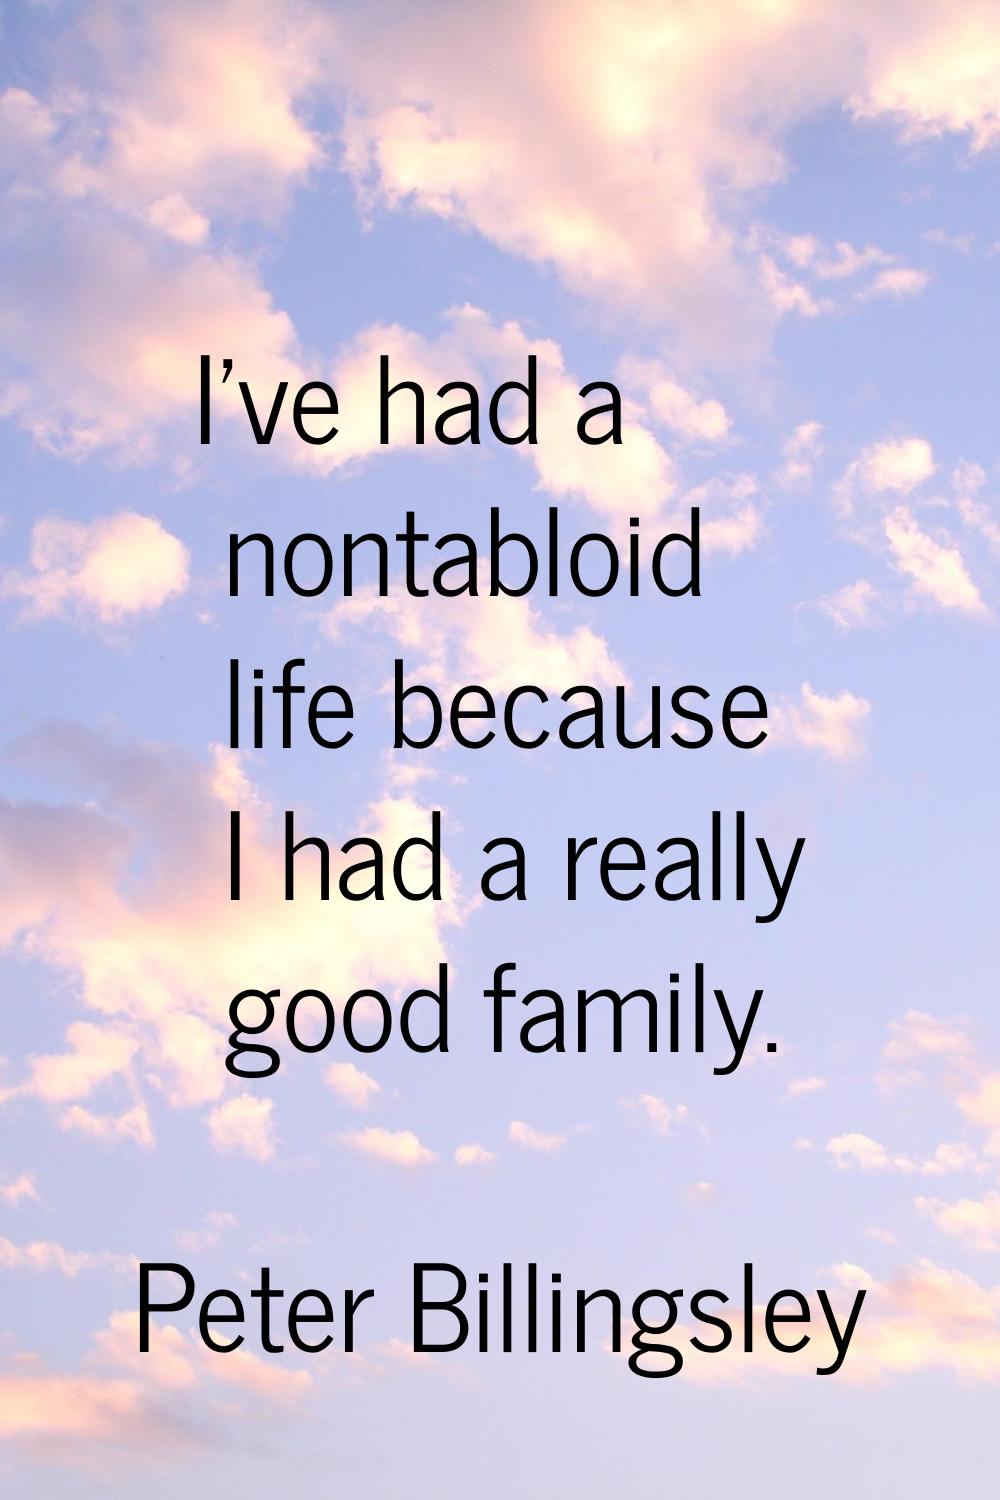 I've had a nontabloid life because I had a really good family.